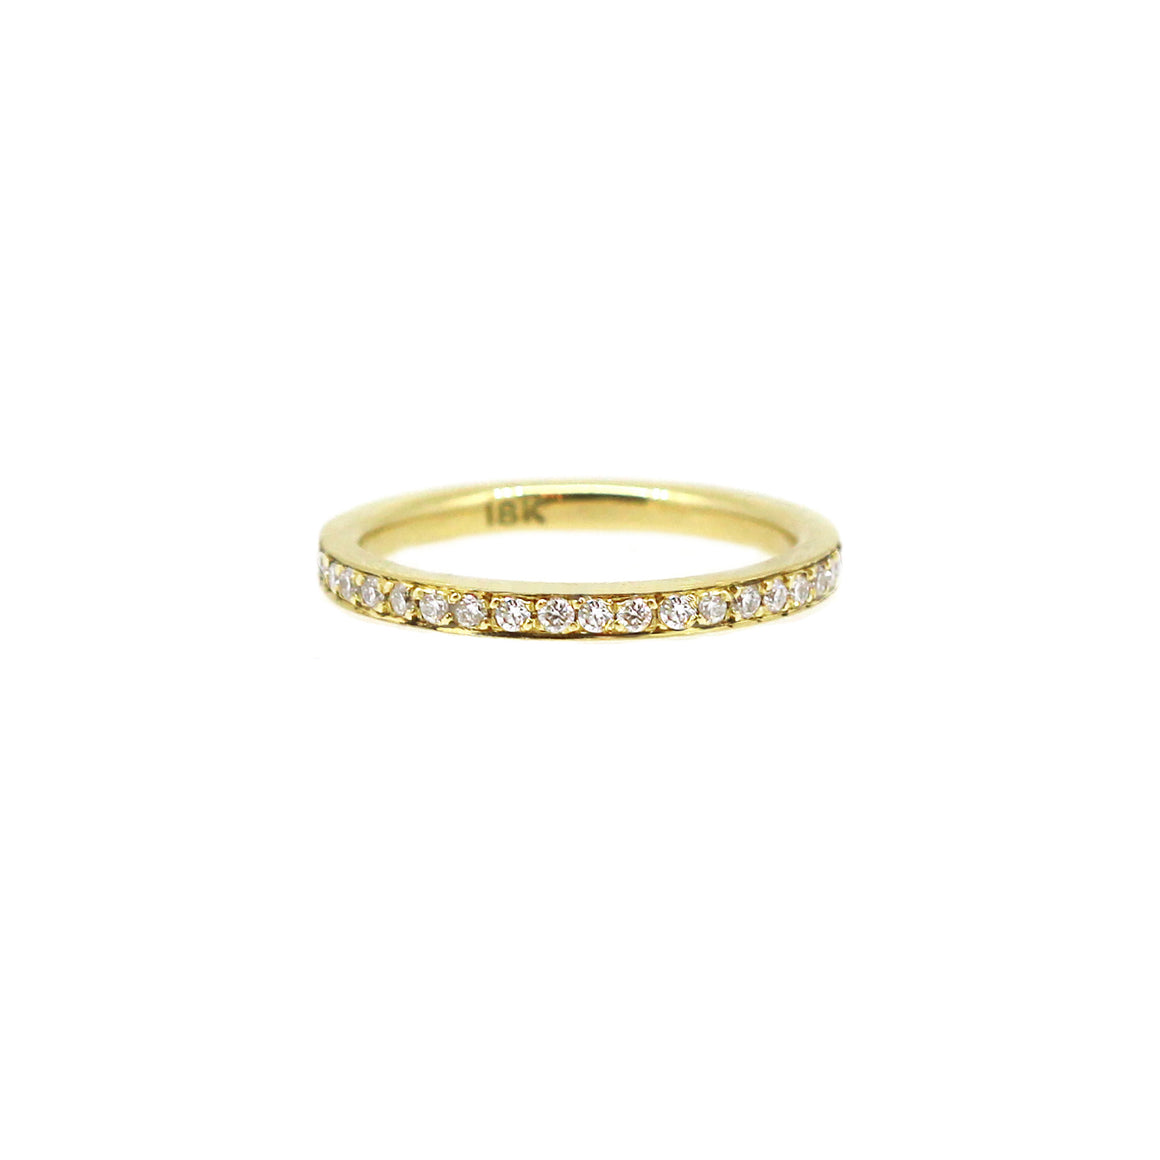 Yellow gold fully set diamond ring